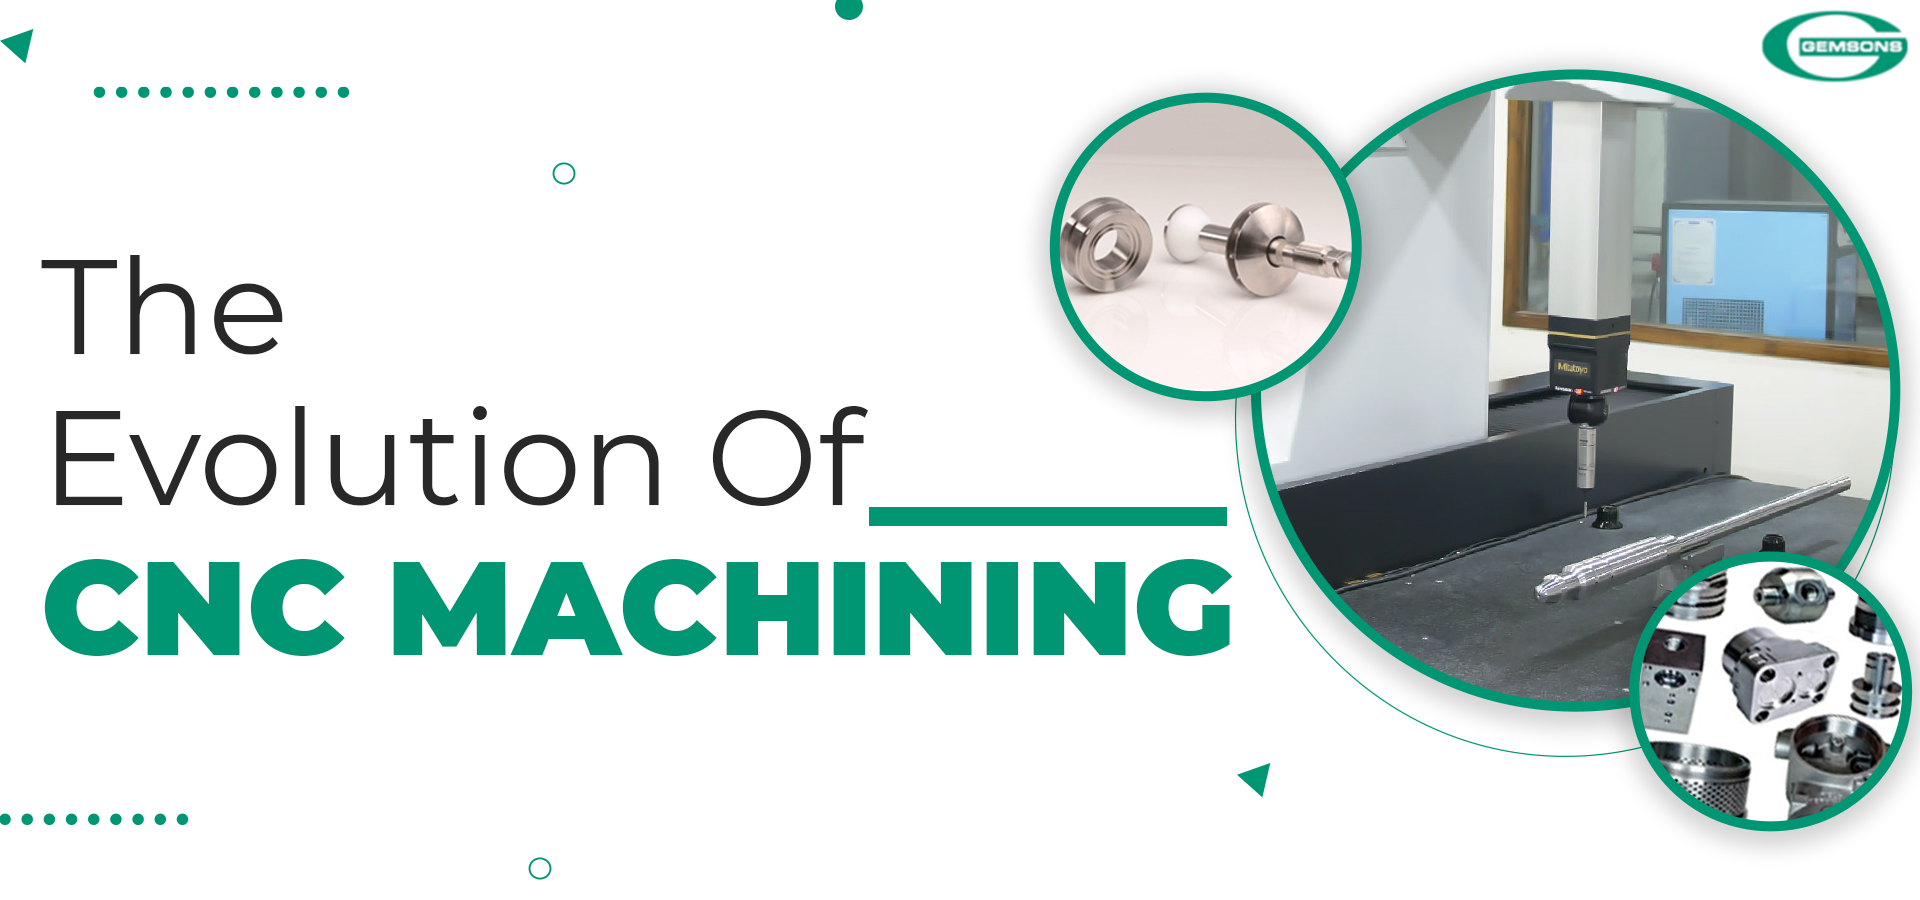 The Evolution of CNC Machining